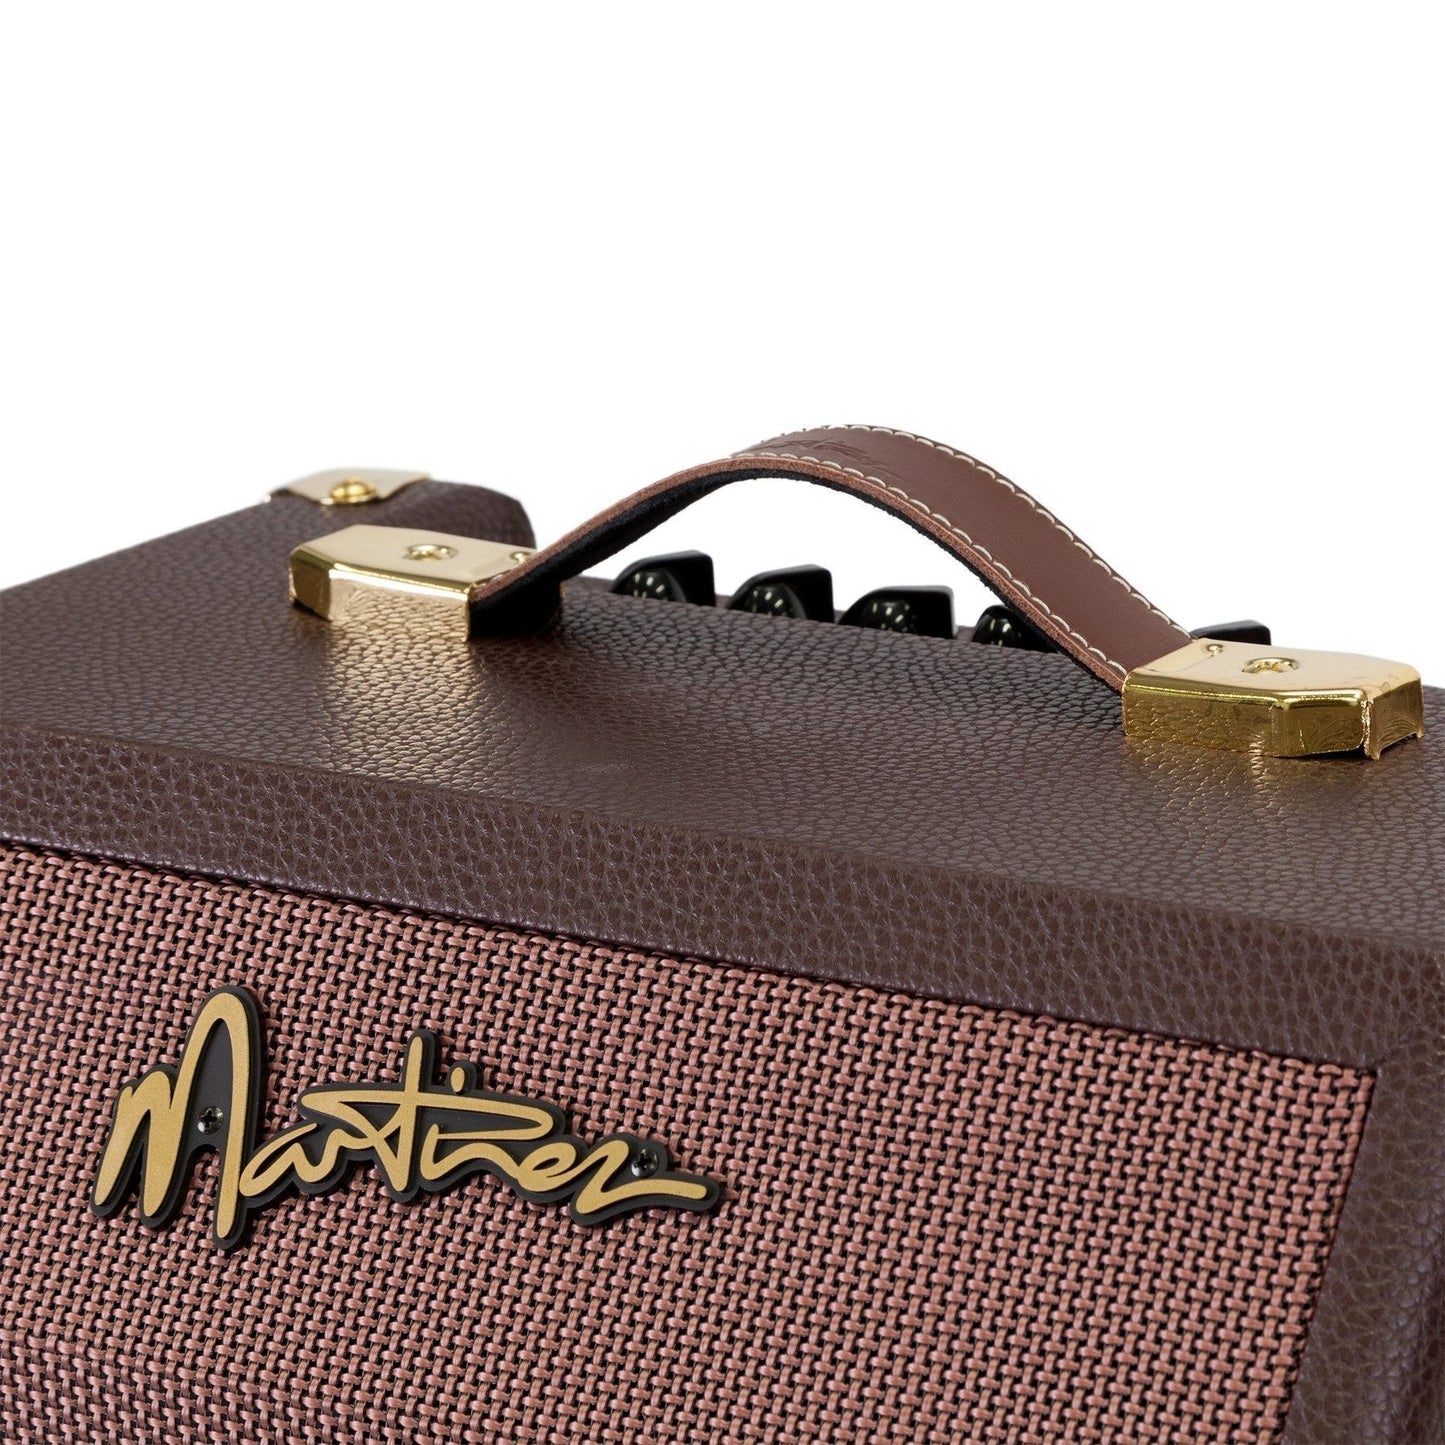 Martinez Retro-Style 15 Watt Acoustic Guitar Amplifier with Chorus (Brown Vinyl)